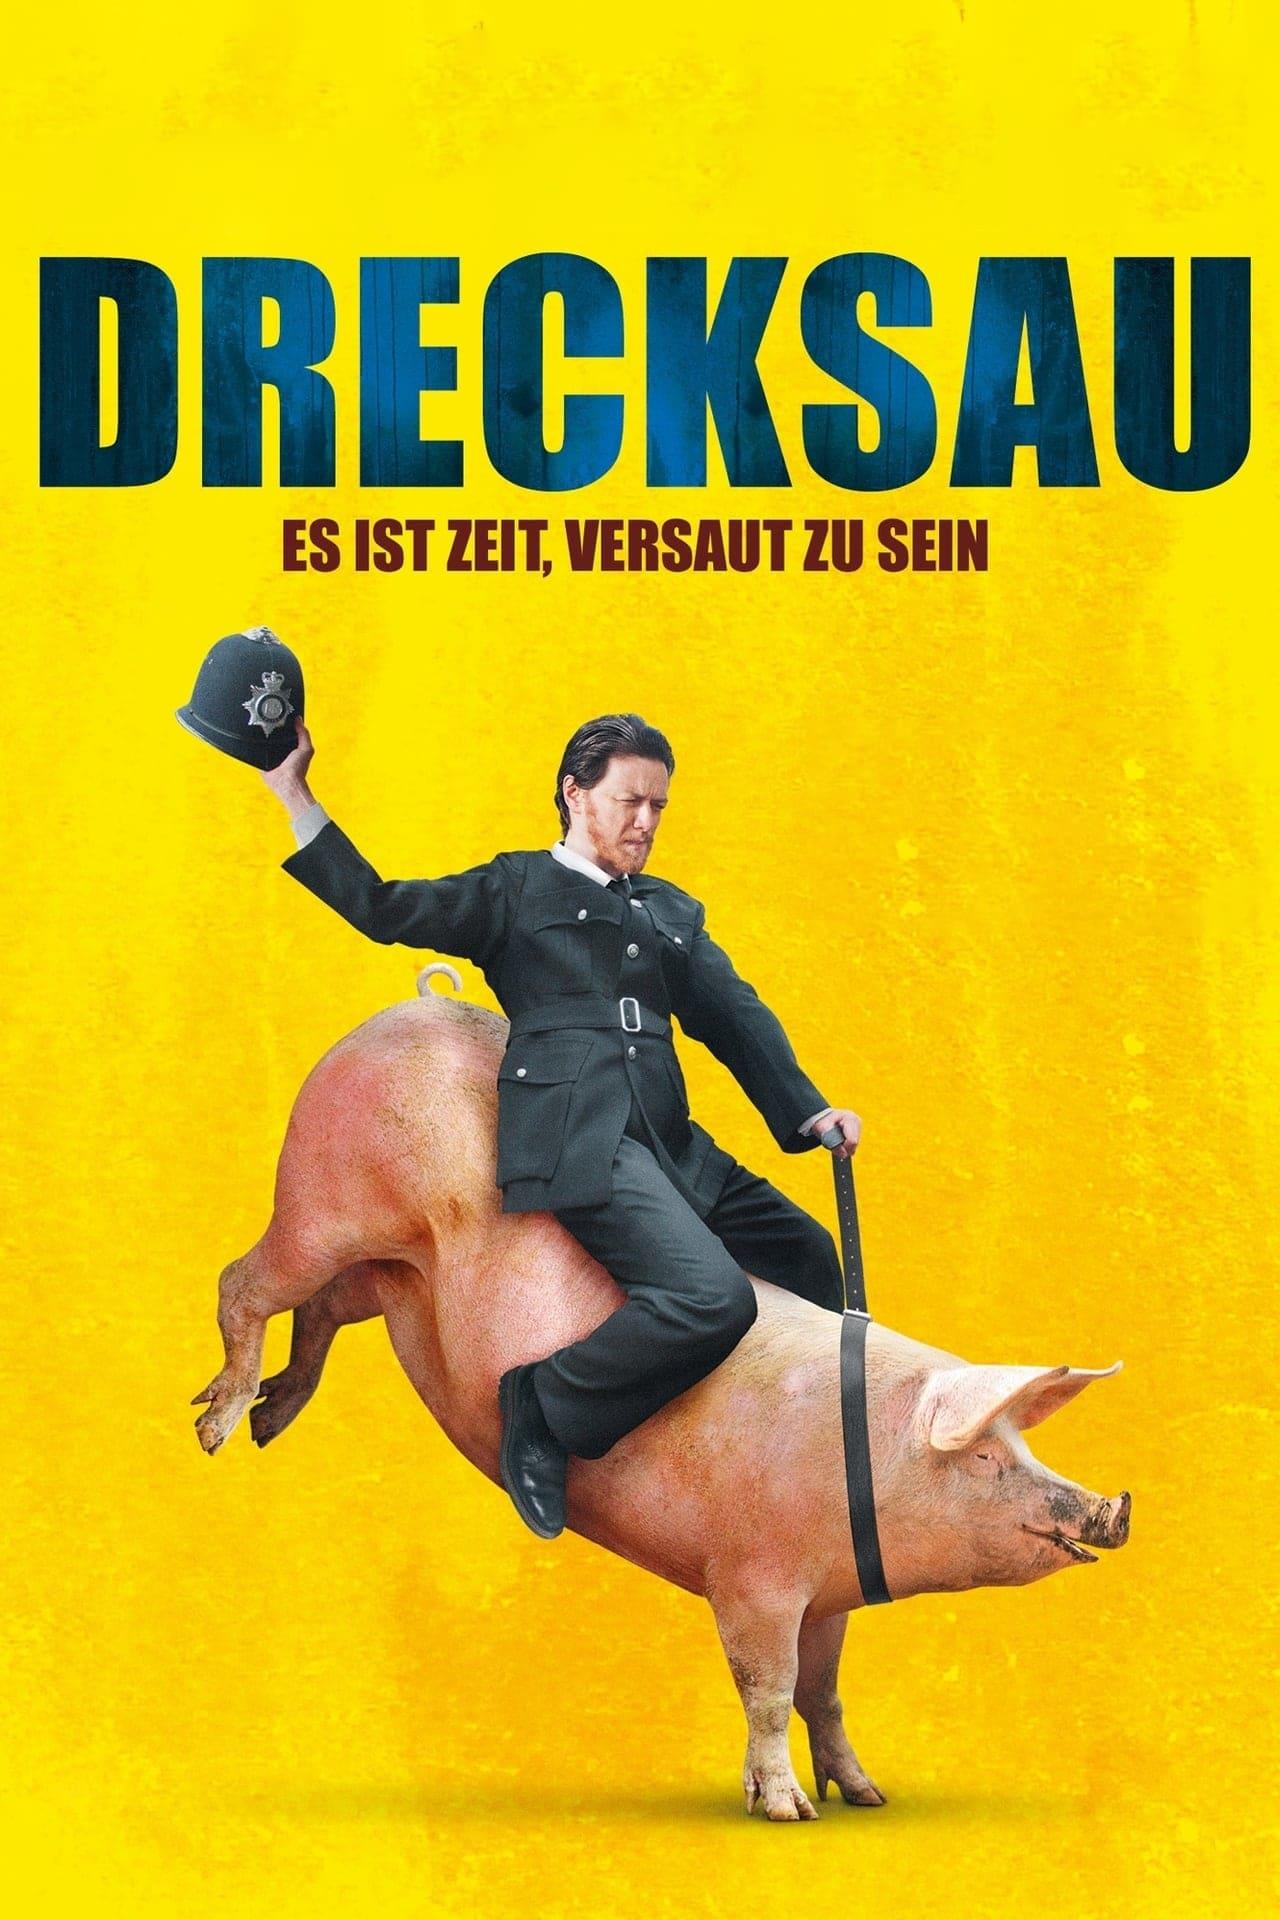 Drecksau poster